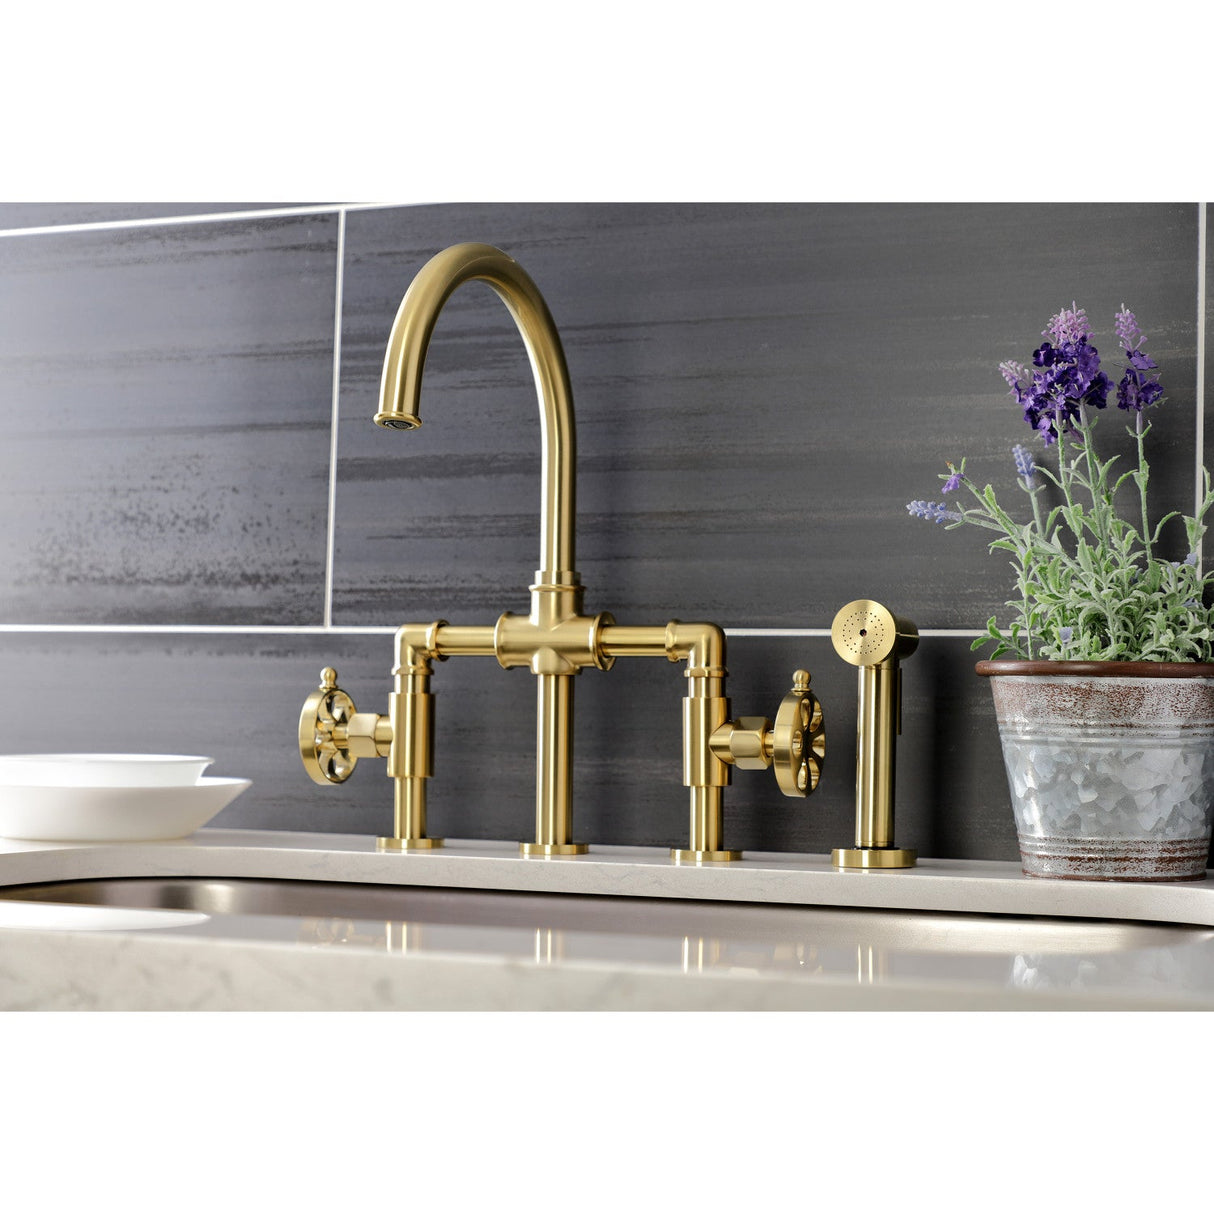 Belknap KS2337RX Two-Handle 4-Hole Deck Mount Bridge Kitchen Faucet with Brass Sprayer, Brushed Brass